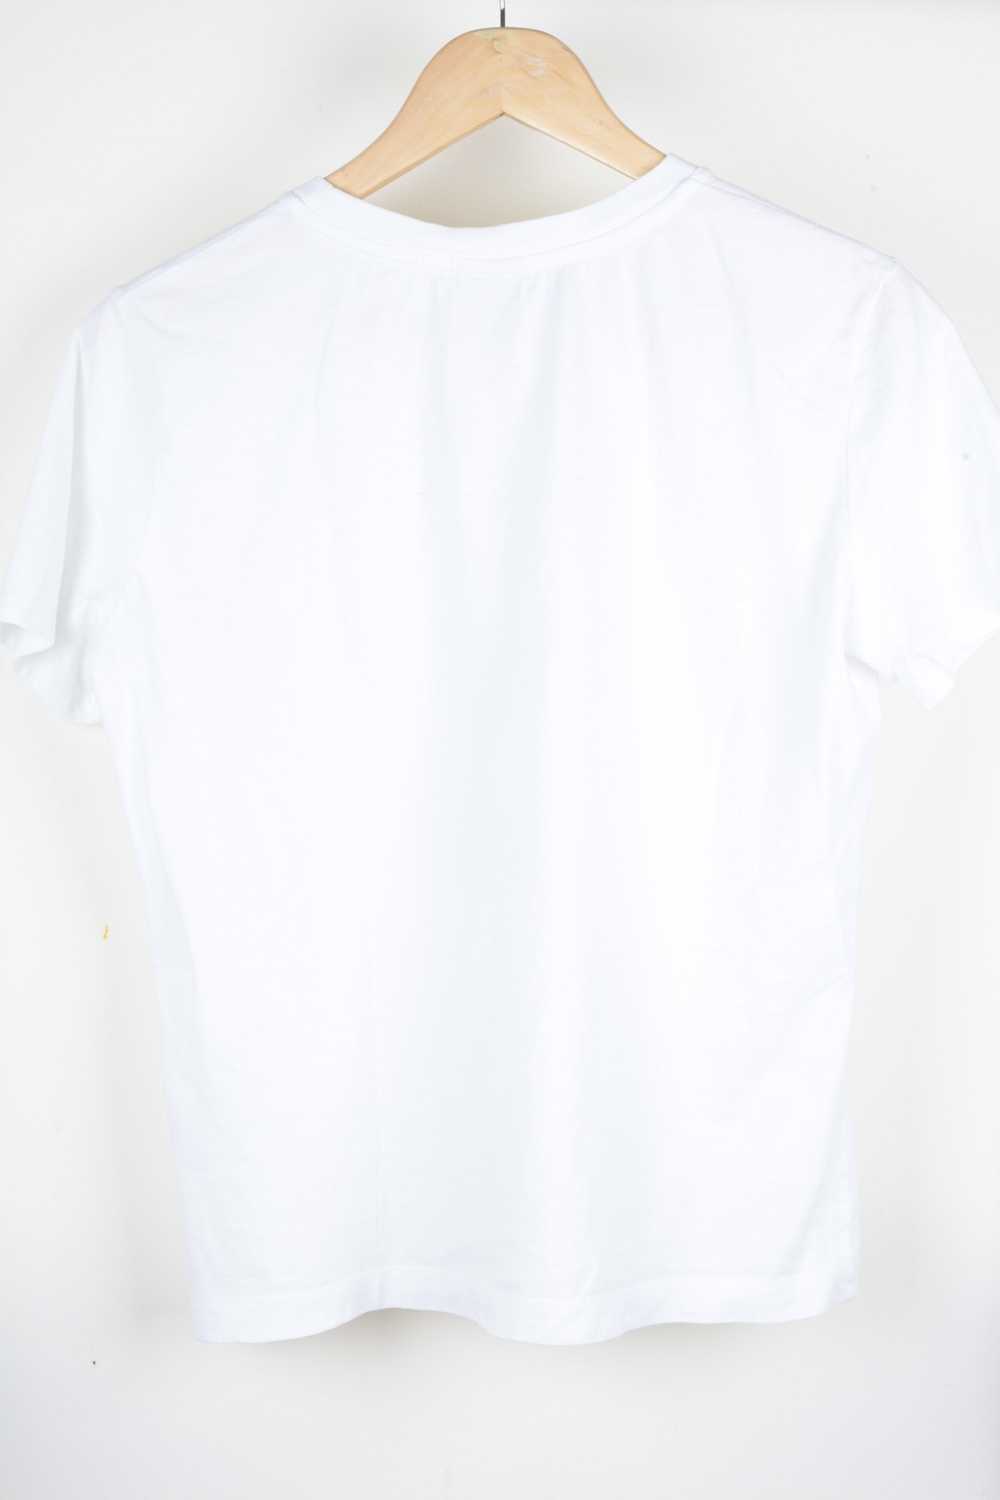 Paul Smith Paul Smith White T-Shirt - image 4